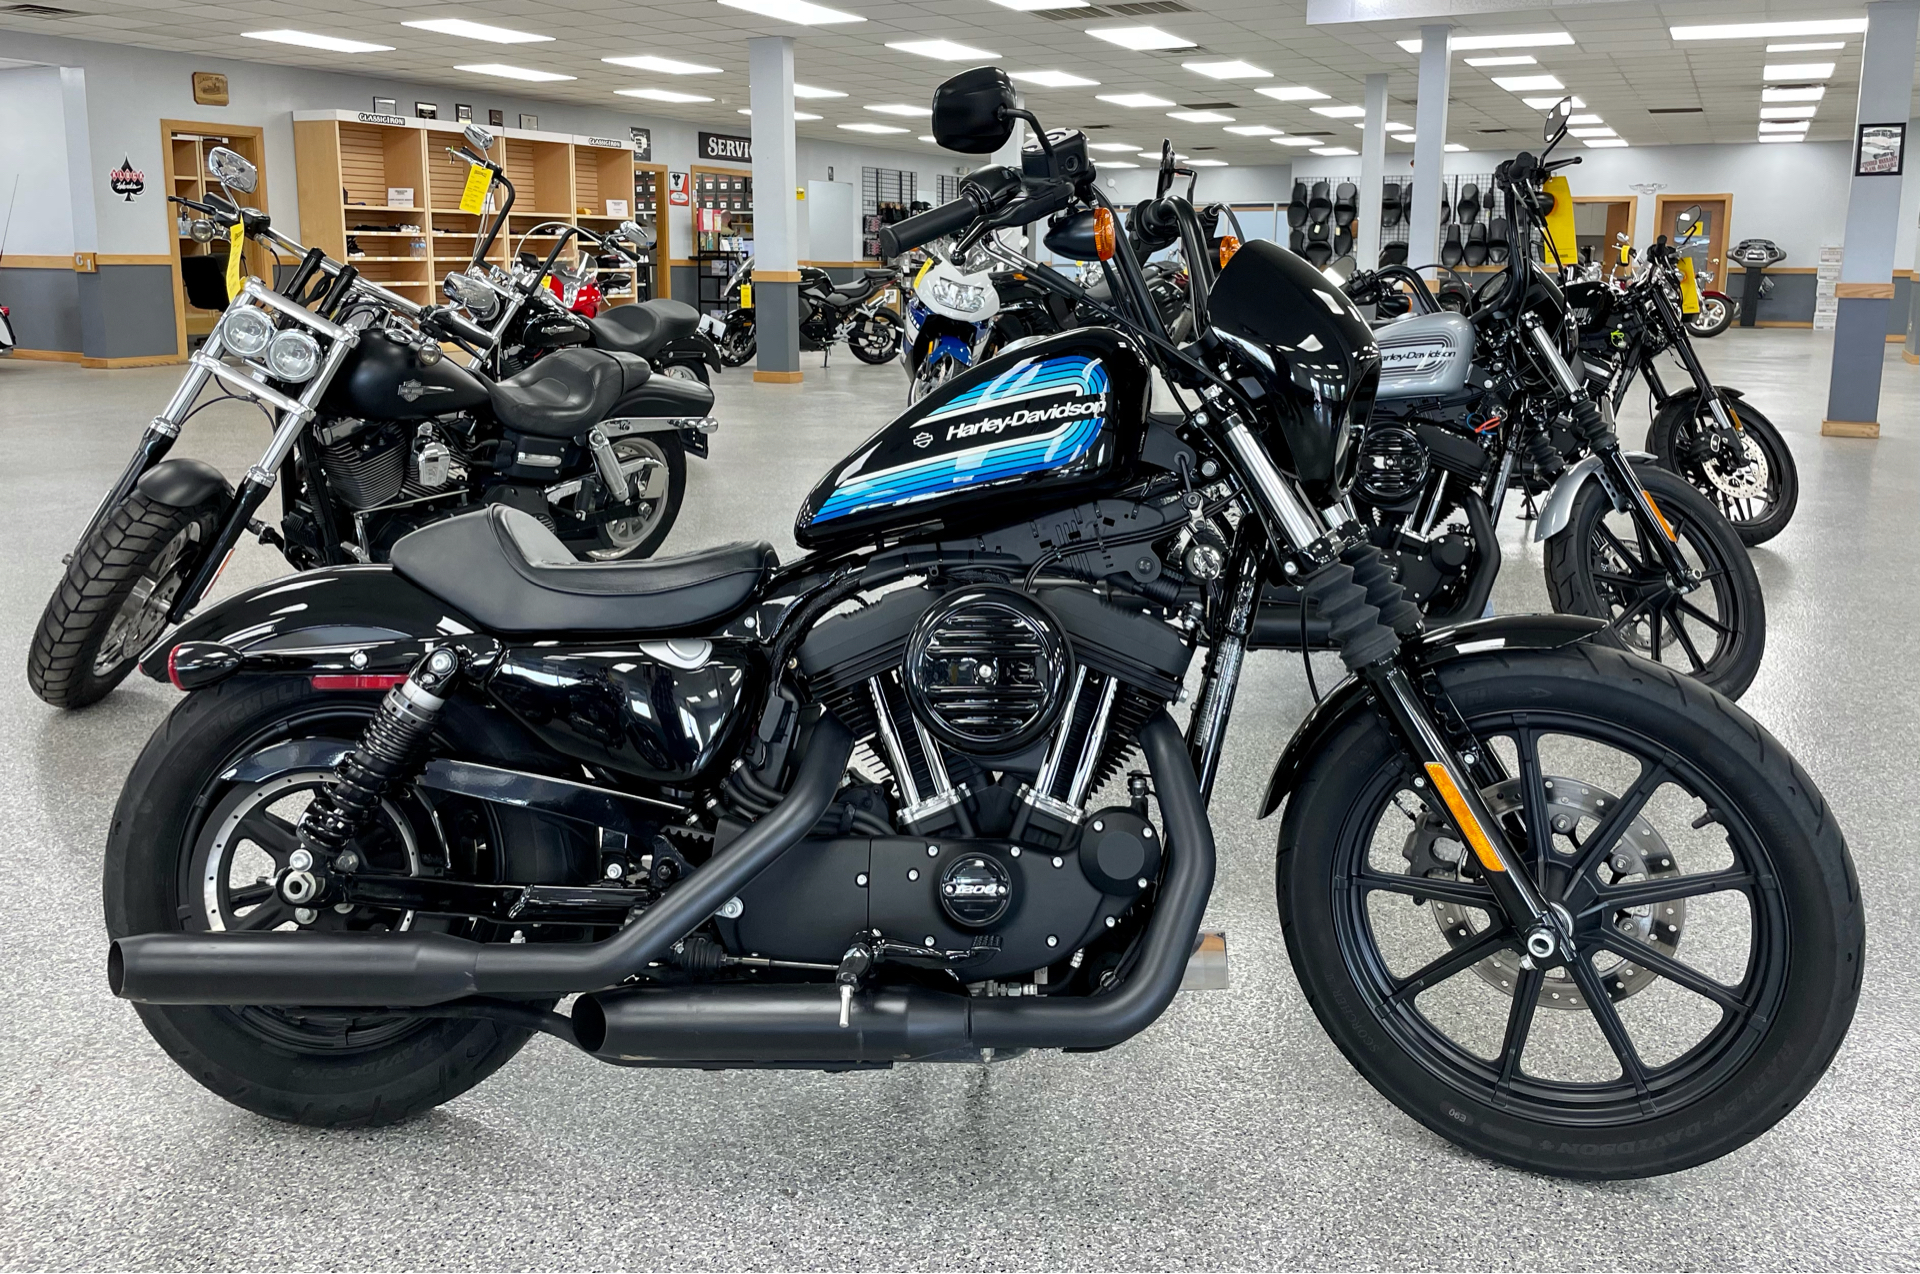 Used 2018 Harley Davidson Iron 1200 Vivid Black Motorcycles In Fredericksburg Va 10640